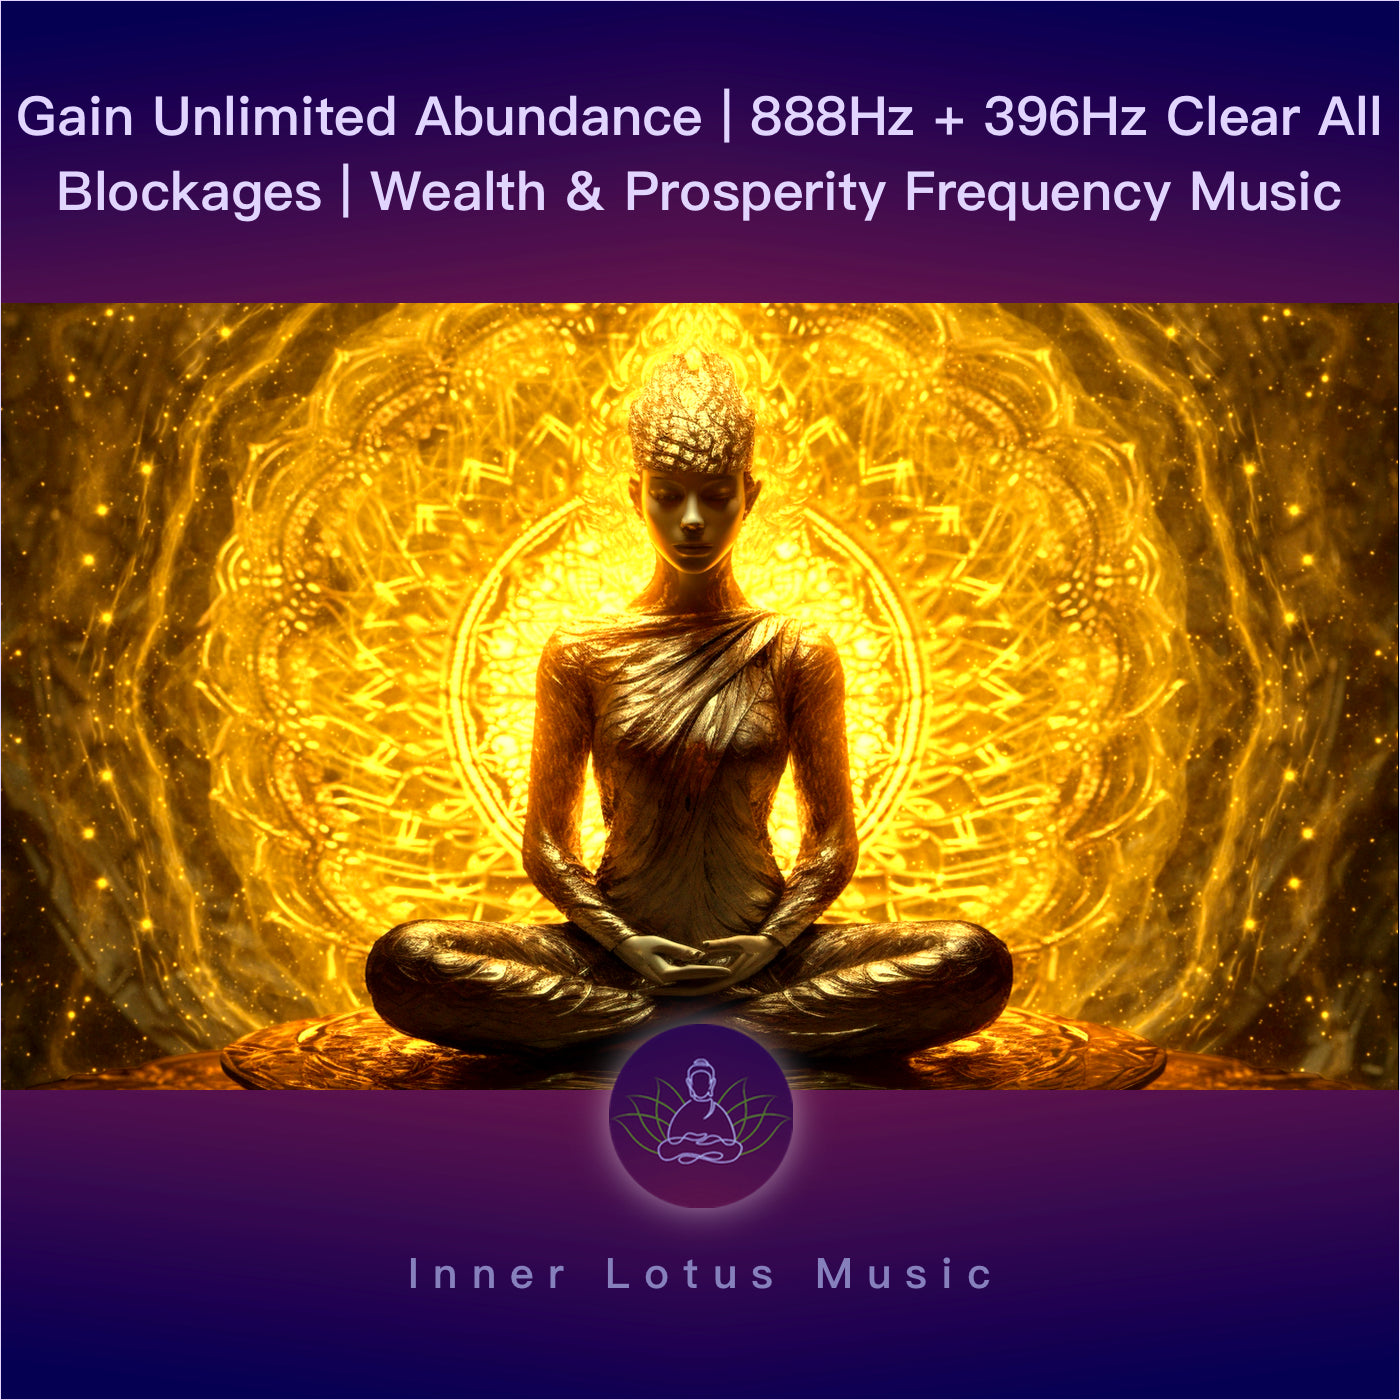 Gain Unlimited Abundance | 888Hz + 396Hz | Clear All Blockages | Wealth & Prosperity Frequency Music